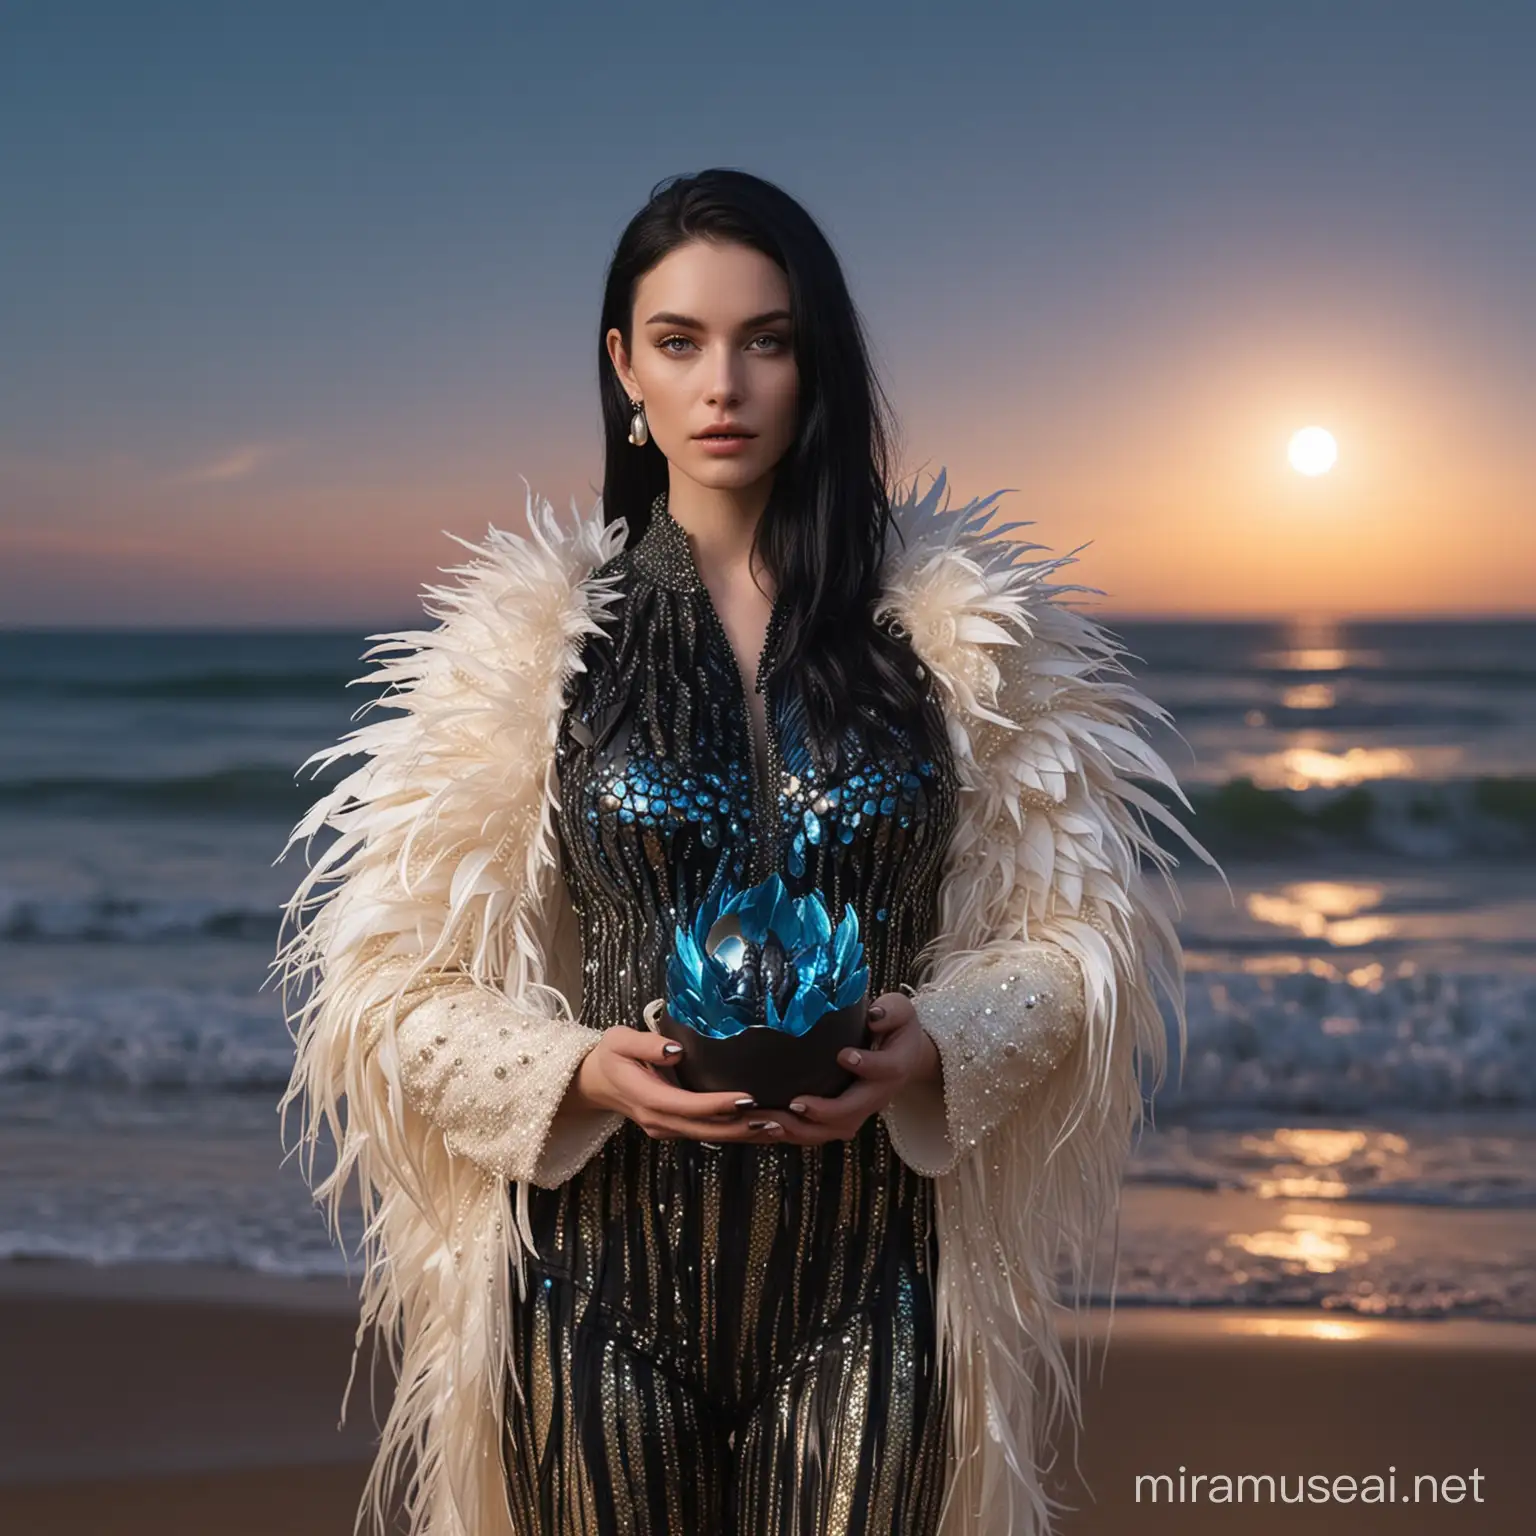 Elegant Woman with Metallic Dragon in Golden Eggshell Schiaparelli Inspired Couture on Moonlit Beach